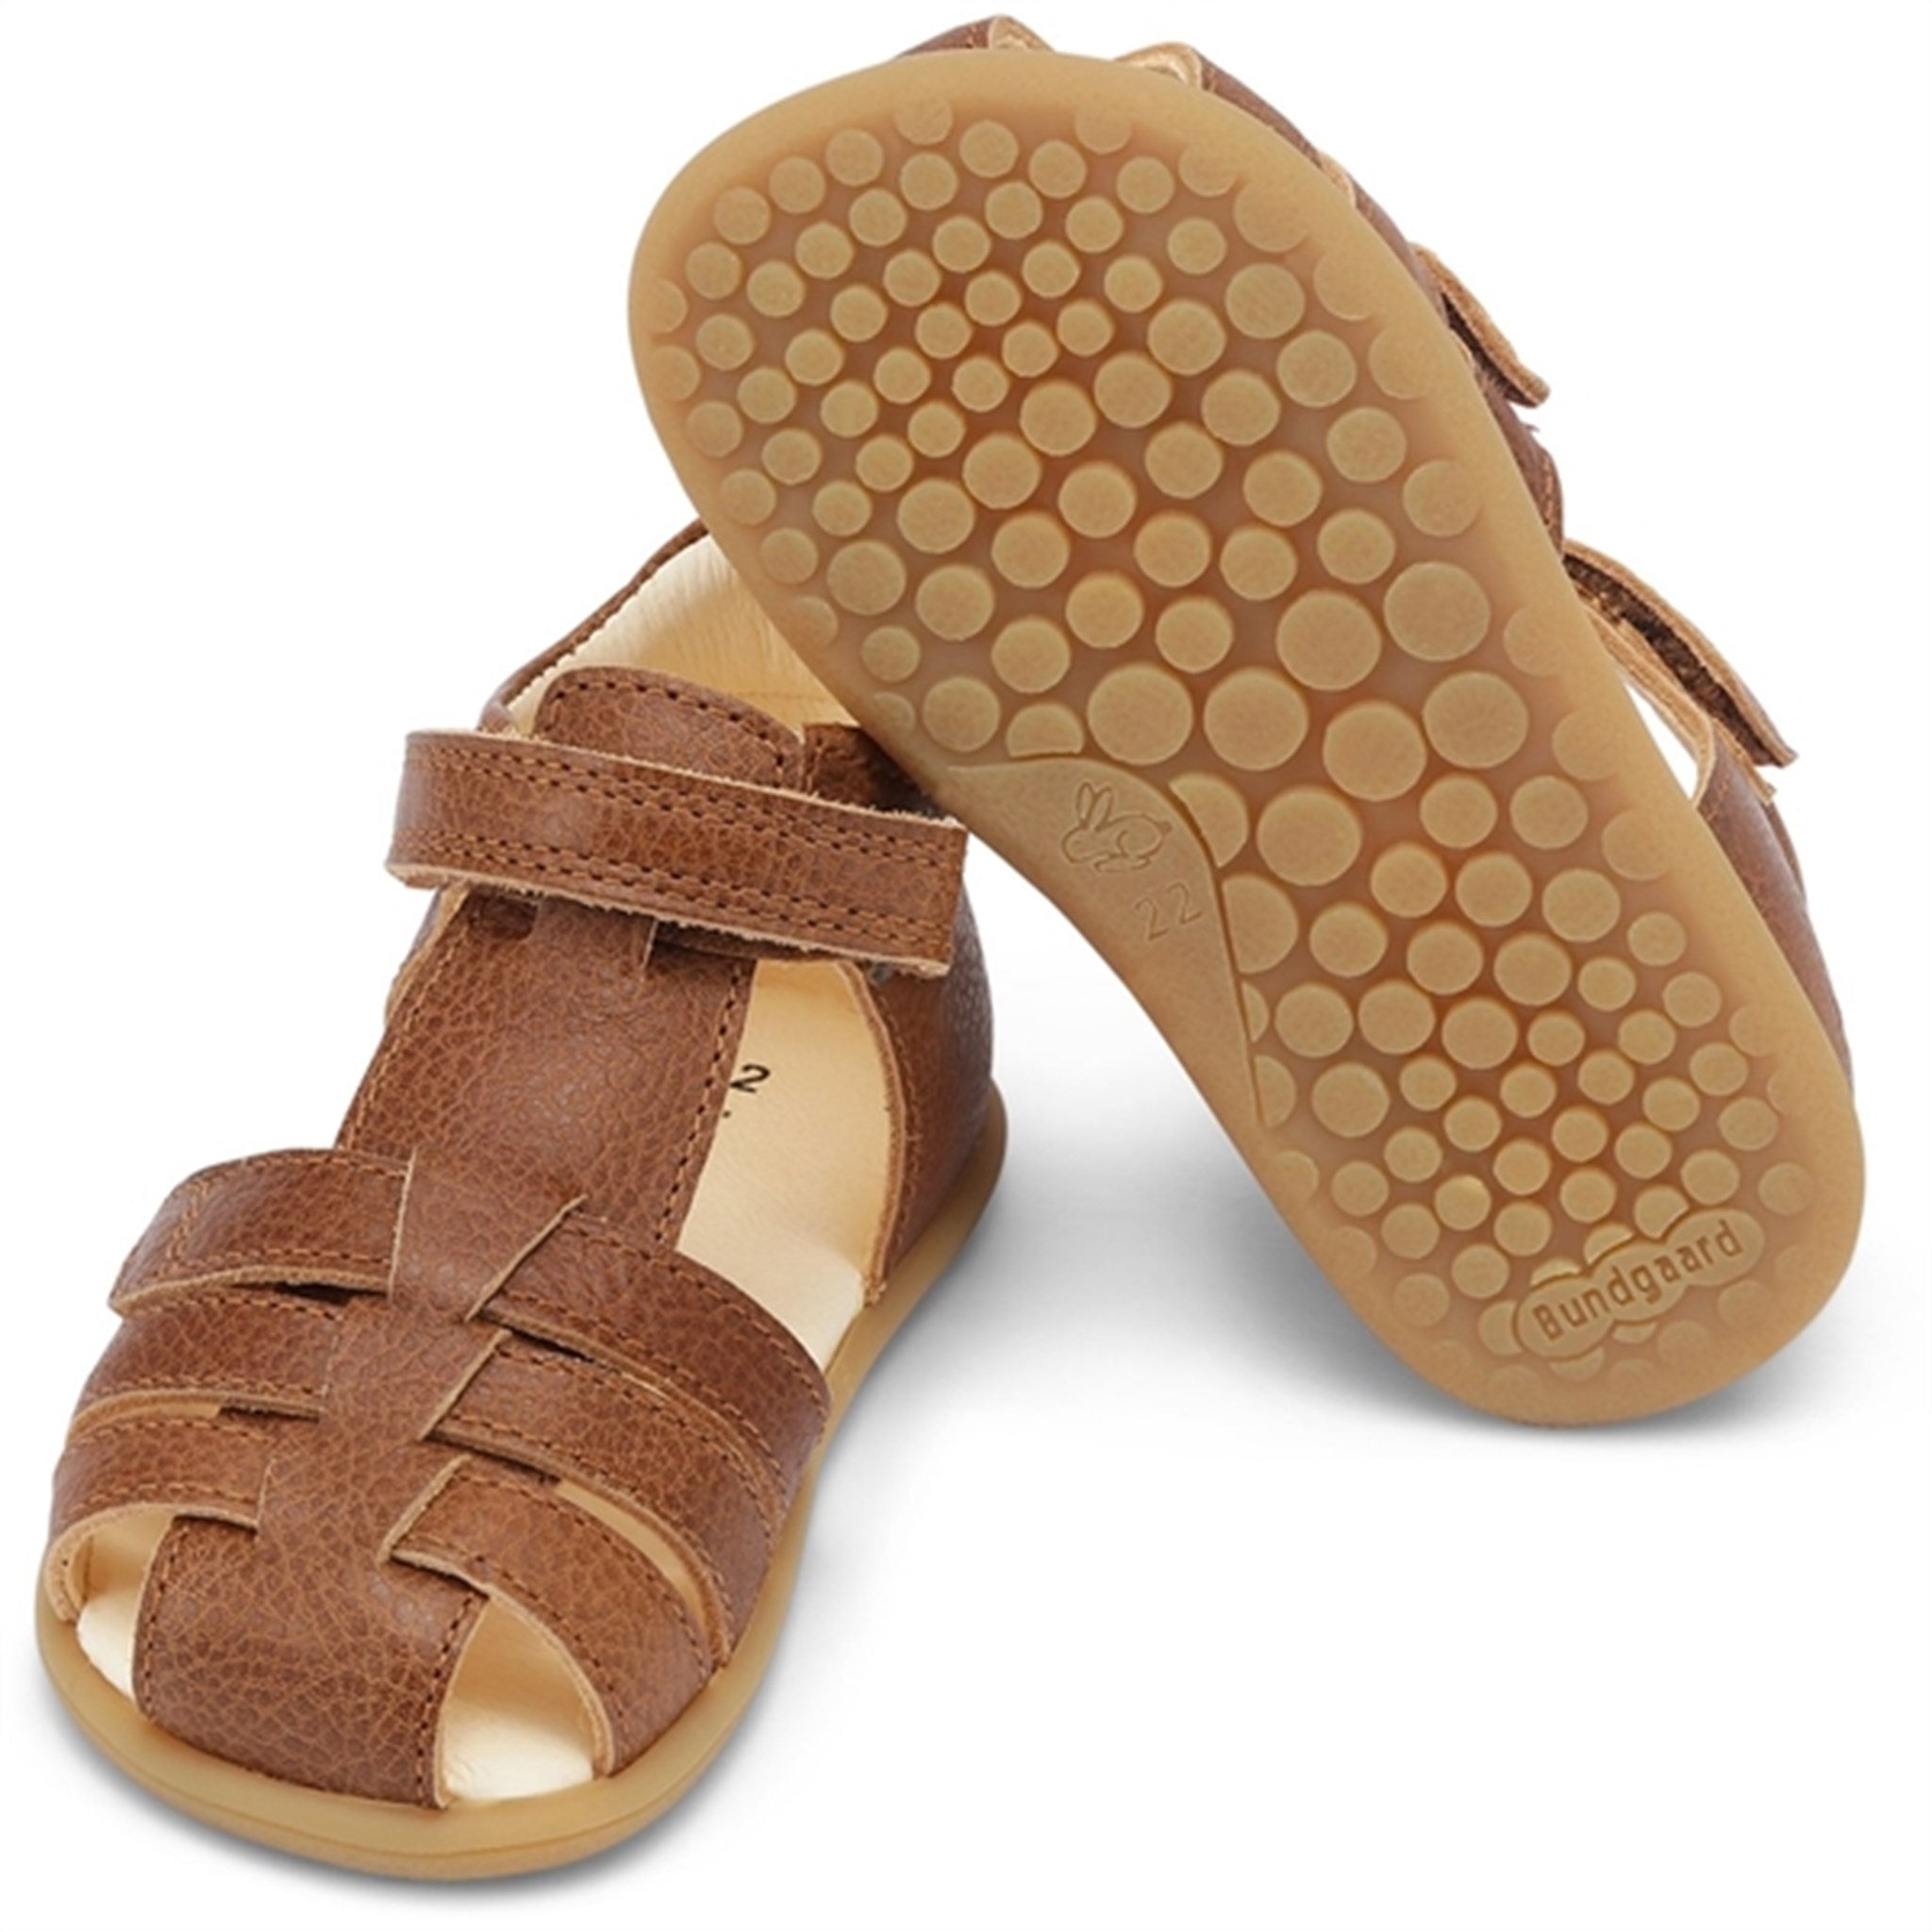 Bundgaard Rox III Sandal Tan G 3